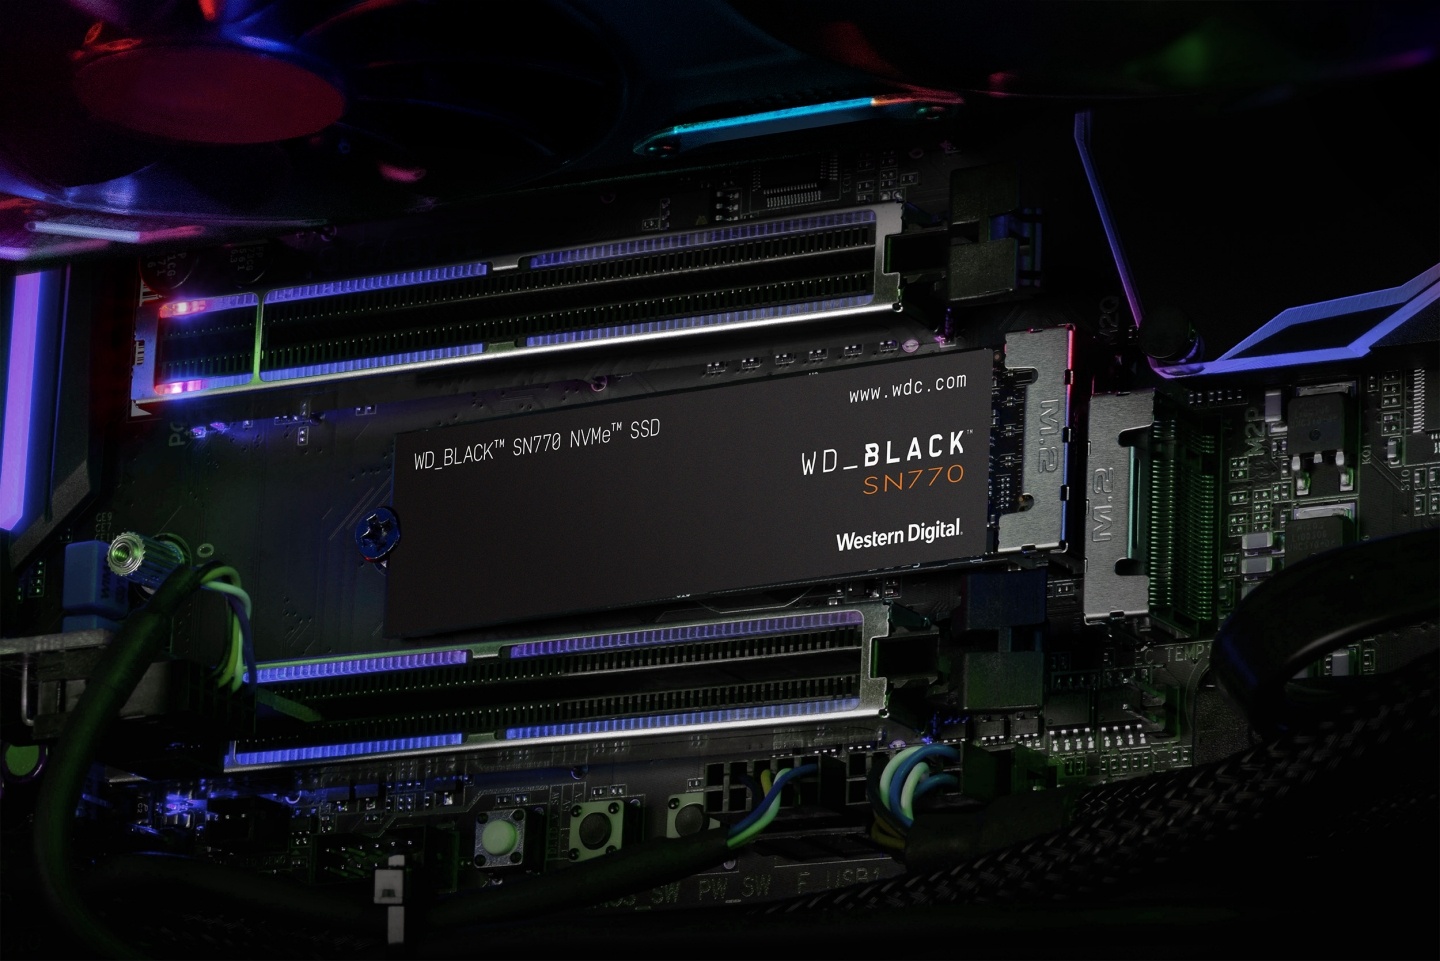 Western Digital 全新 WD_BLACK SN770 NVMe SSD 登台！要讓 PC 玩家的遊戲體驗更升級